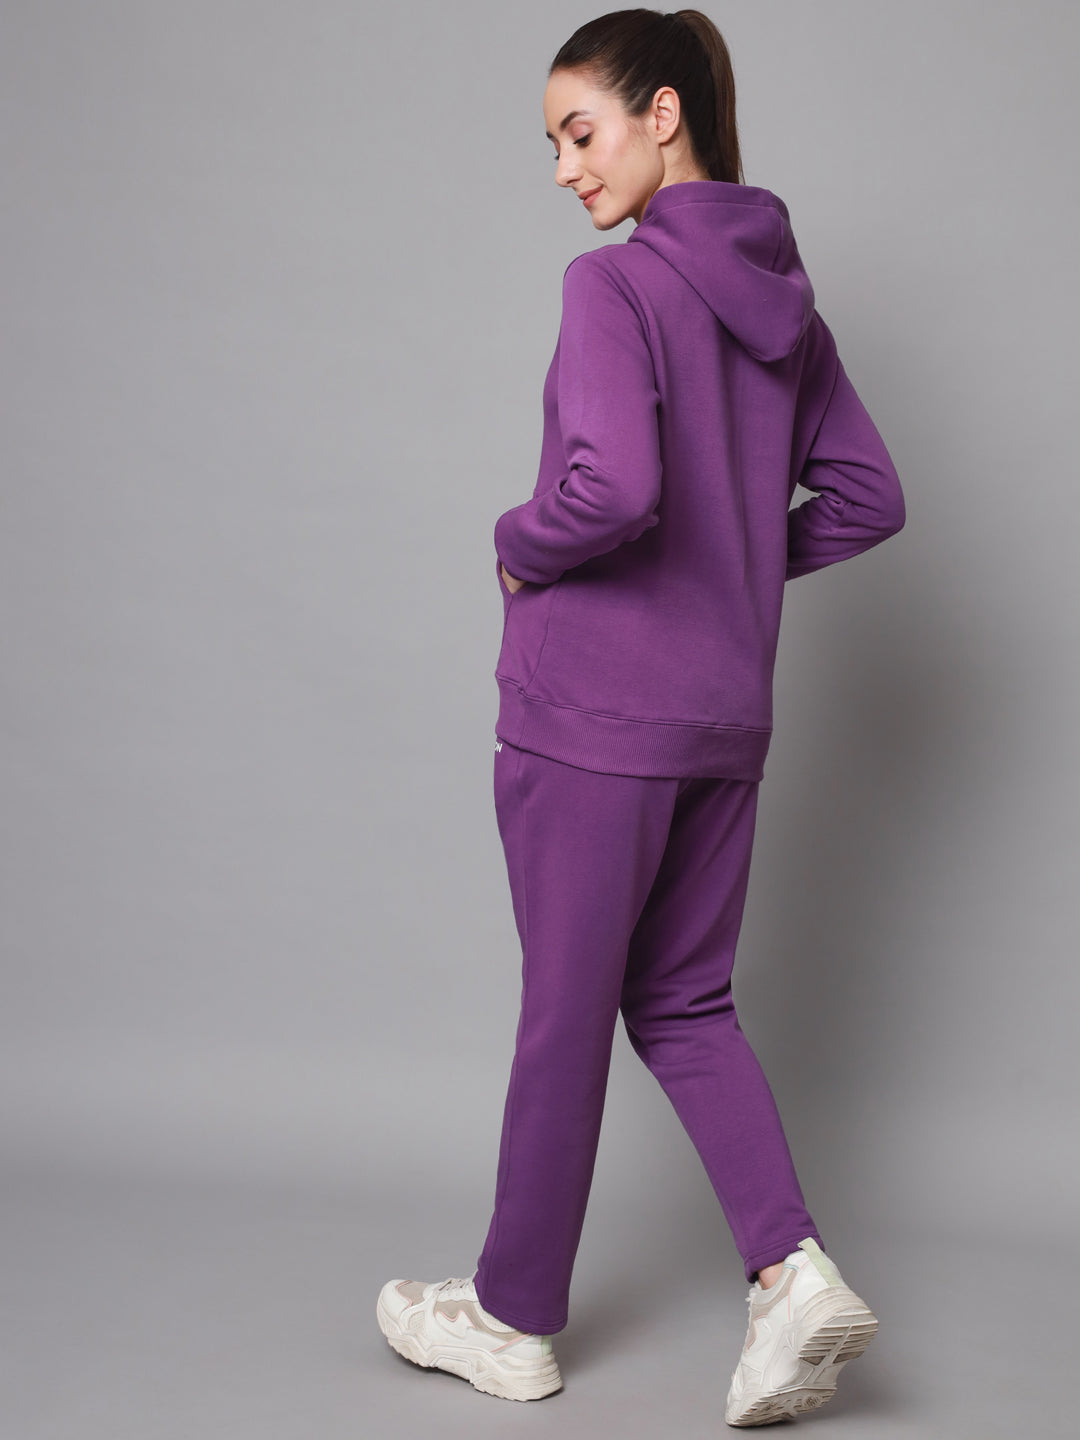 Griffel Women Solid Fleece Basic Hoodie and Joggers Full set Dark Purple Tracksuit - griffel